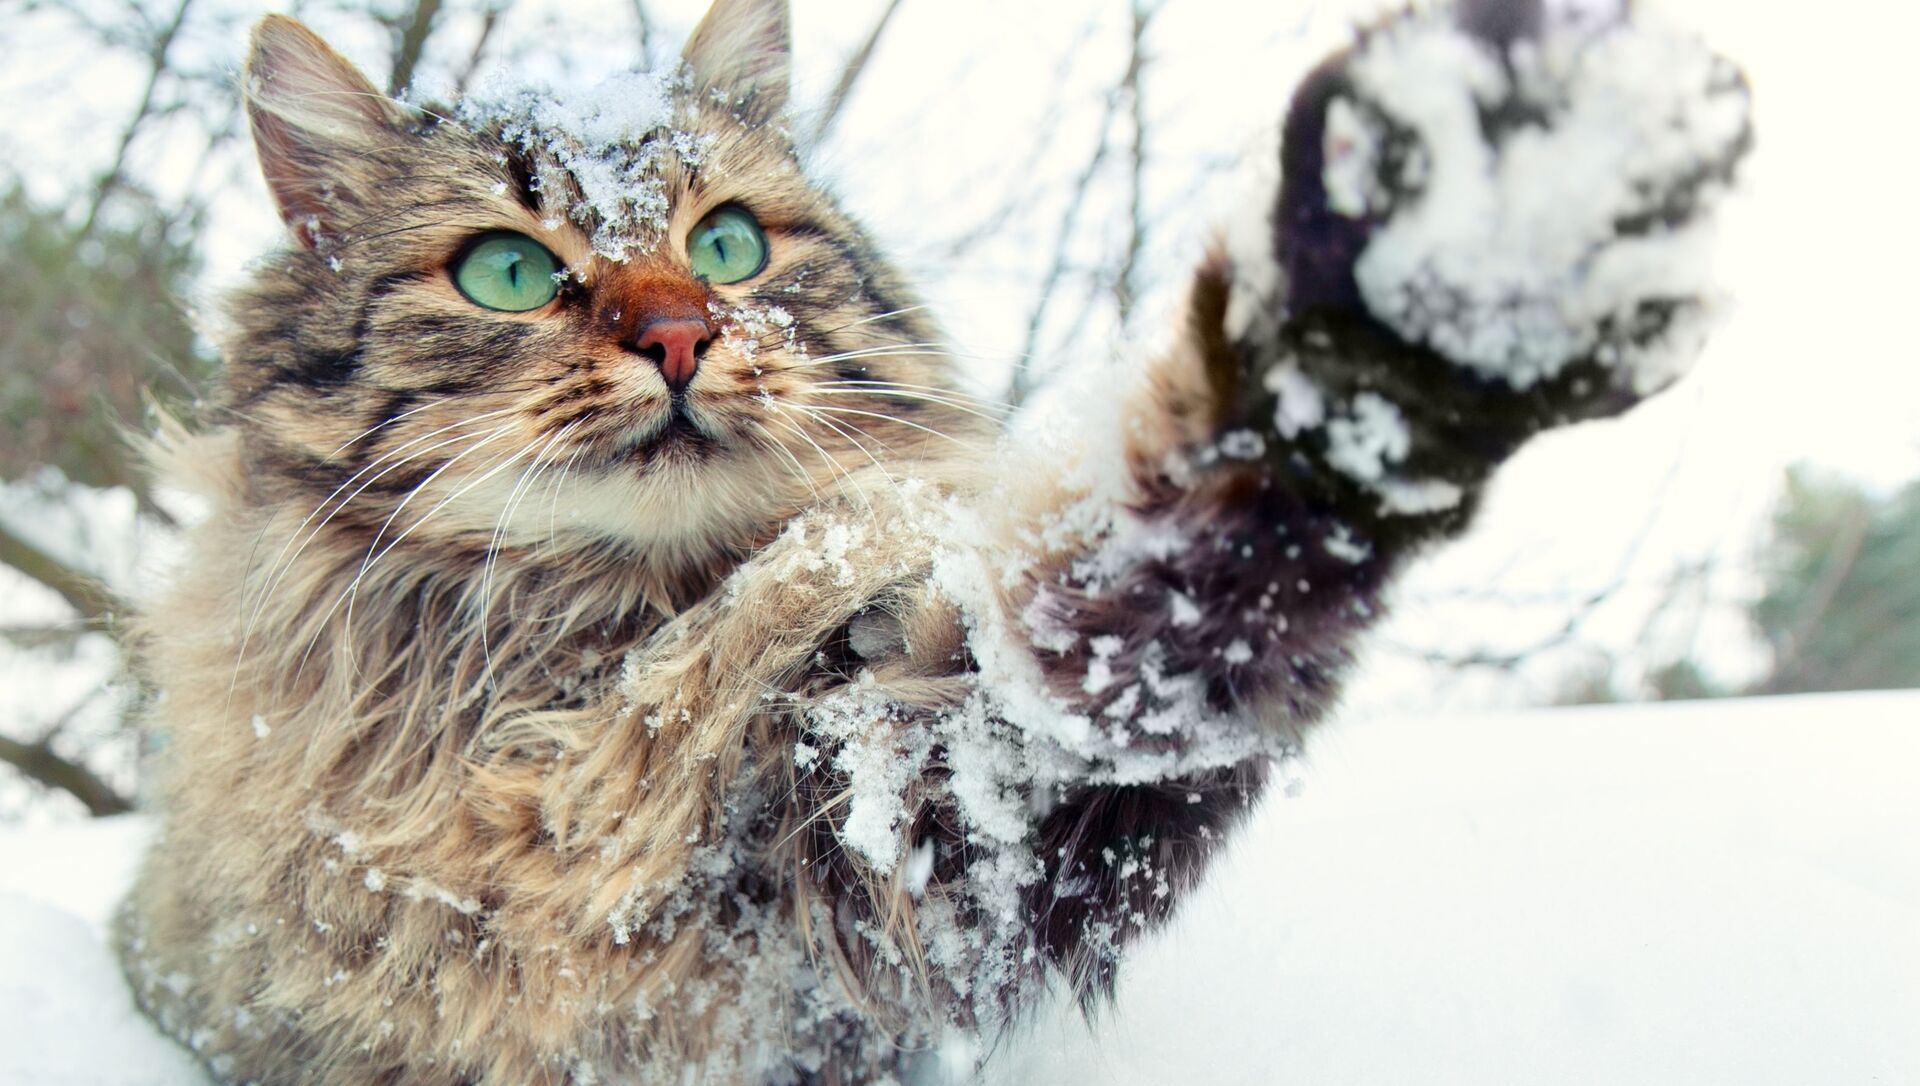 Кошка играет со снегом - Sputnik Lietuva, 1920, 02.02.2021